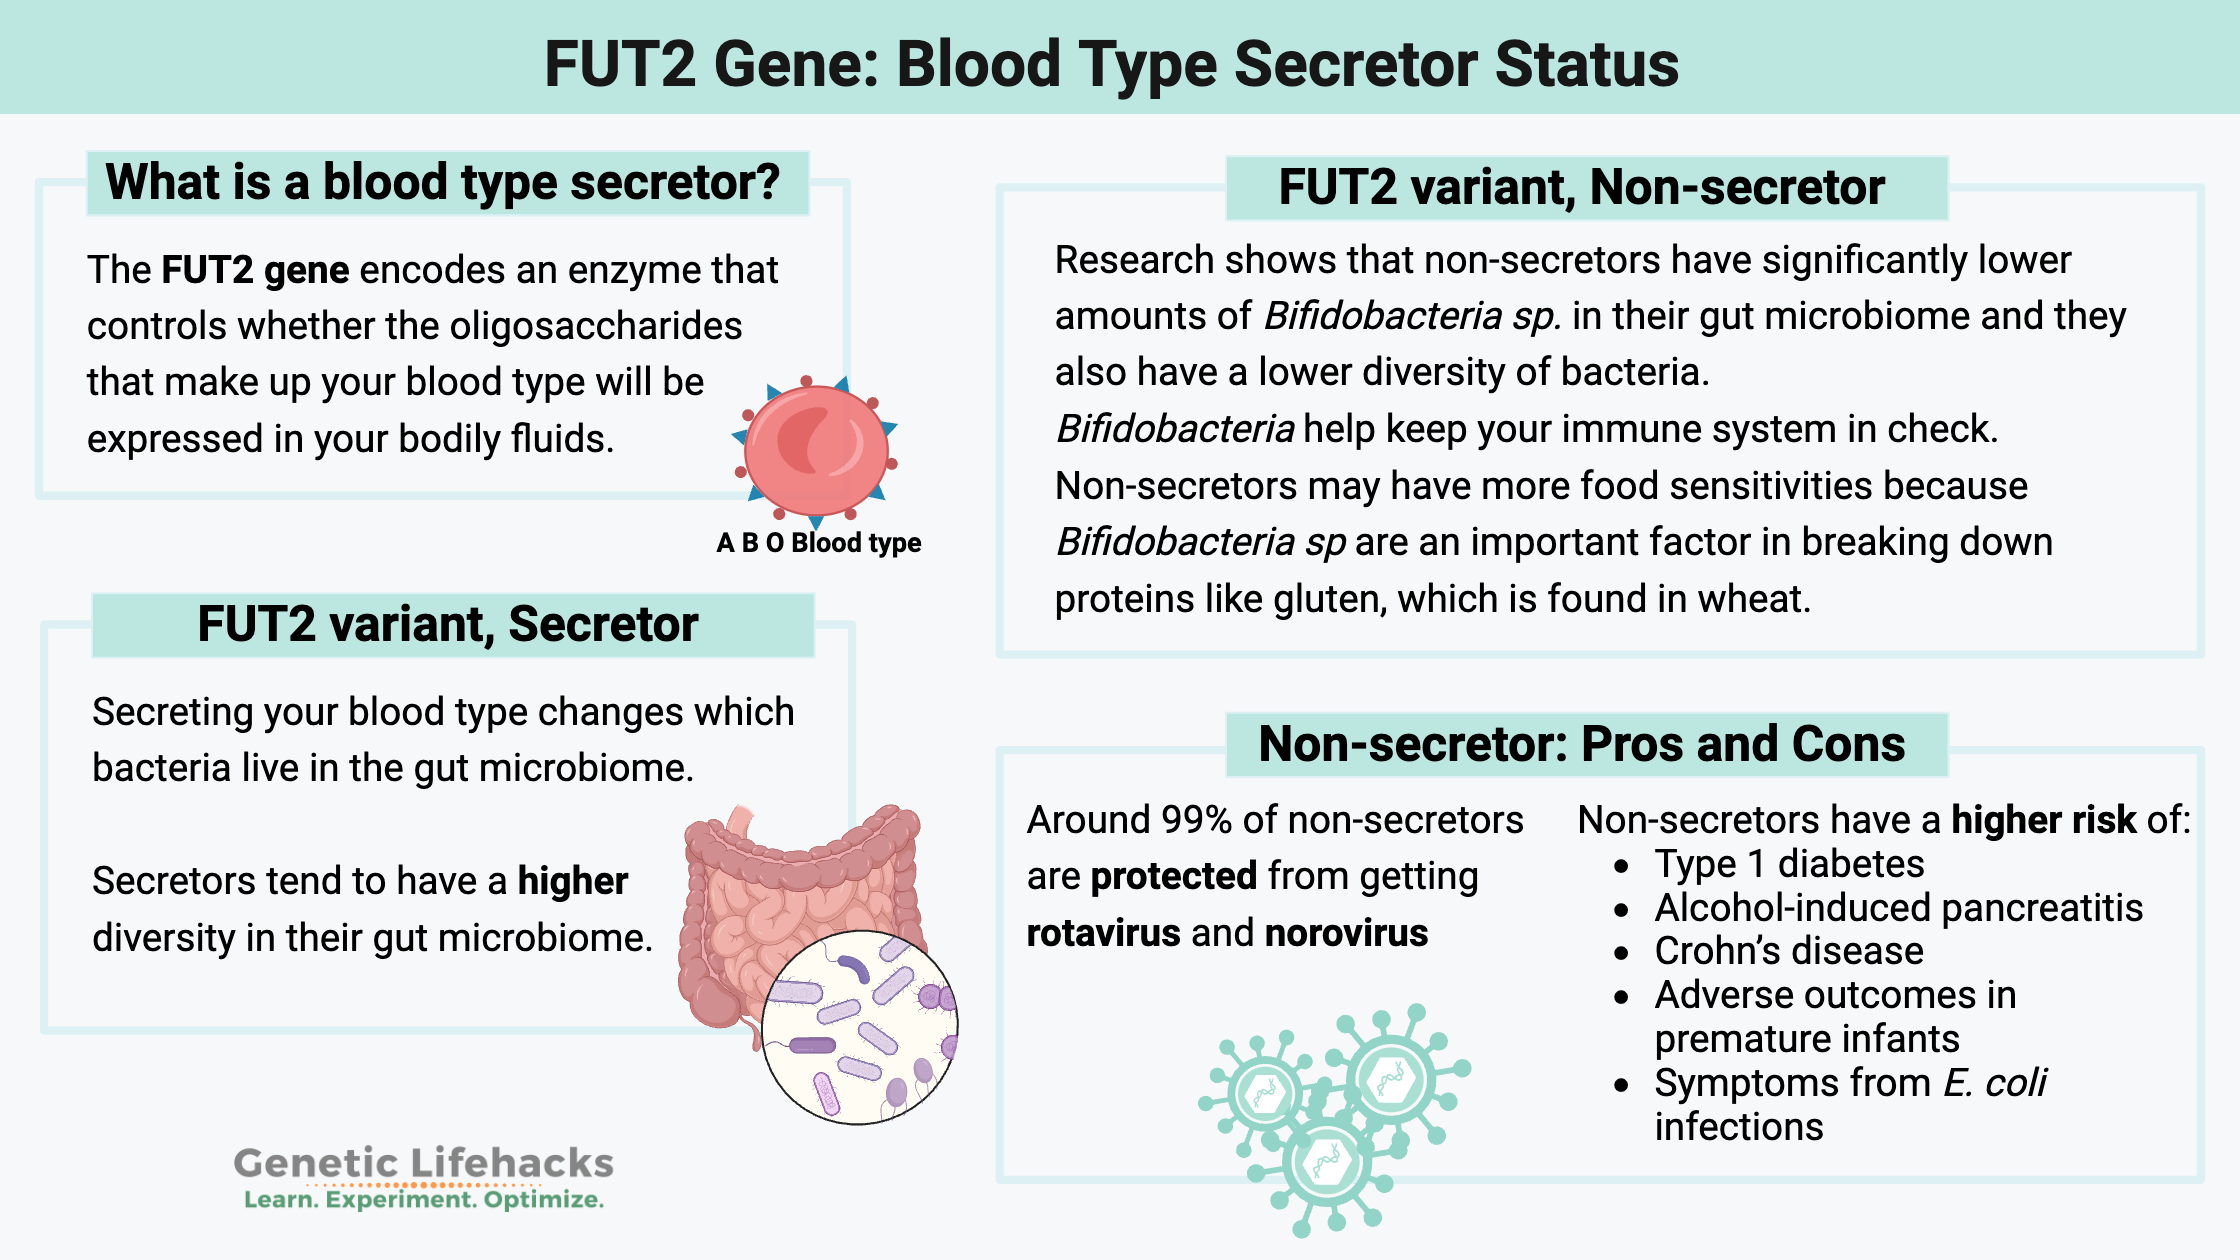 FUT2 blood type secretor status gene